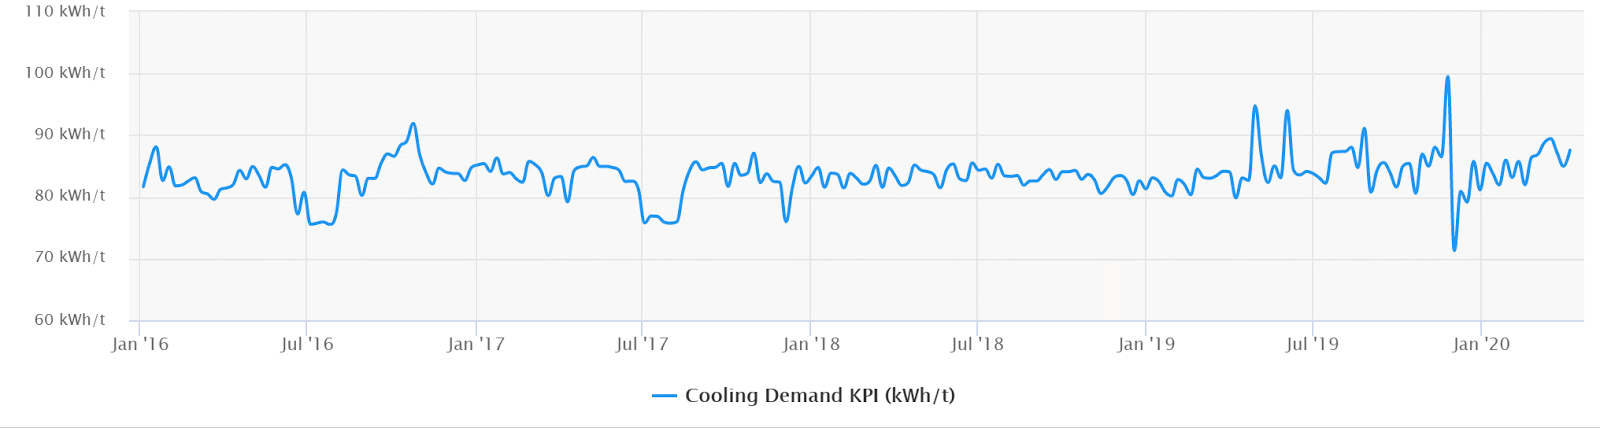 Cooling demand